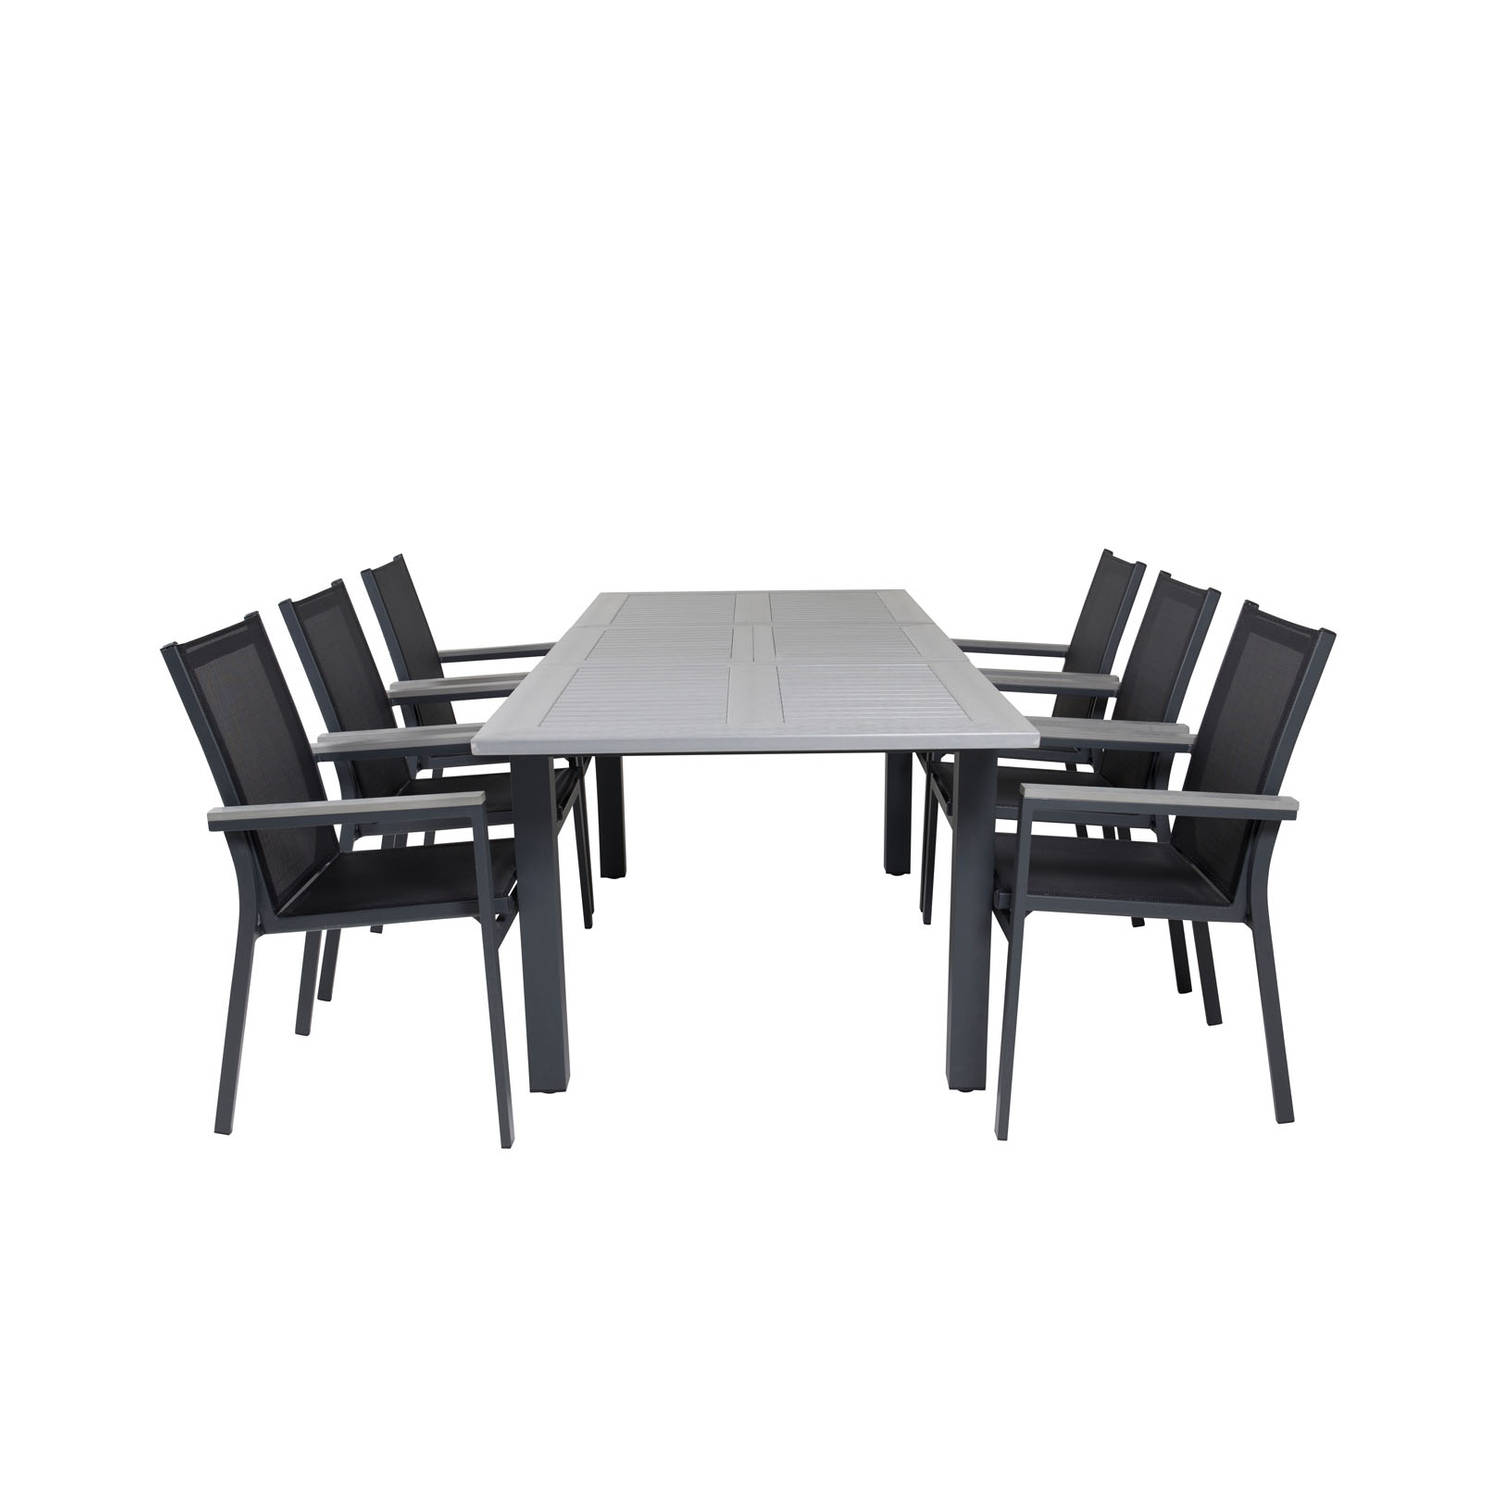 Albany tuinmeubelset tafel 100x160/240cm en 6 stoel Parma zwart, grijs.